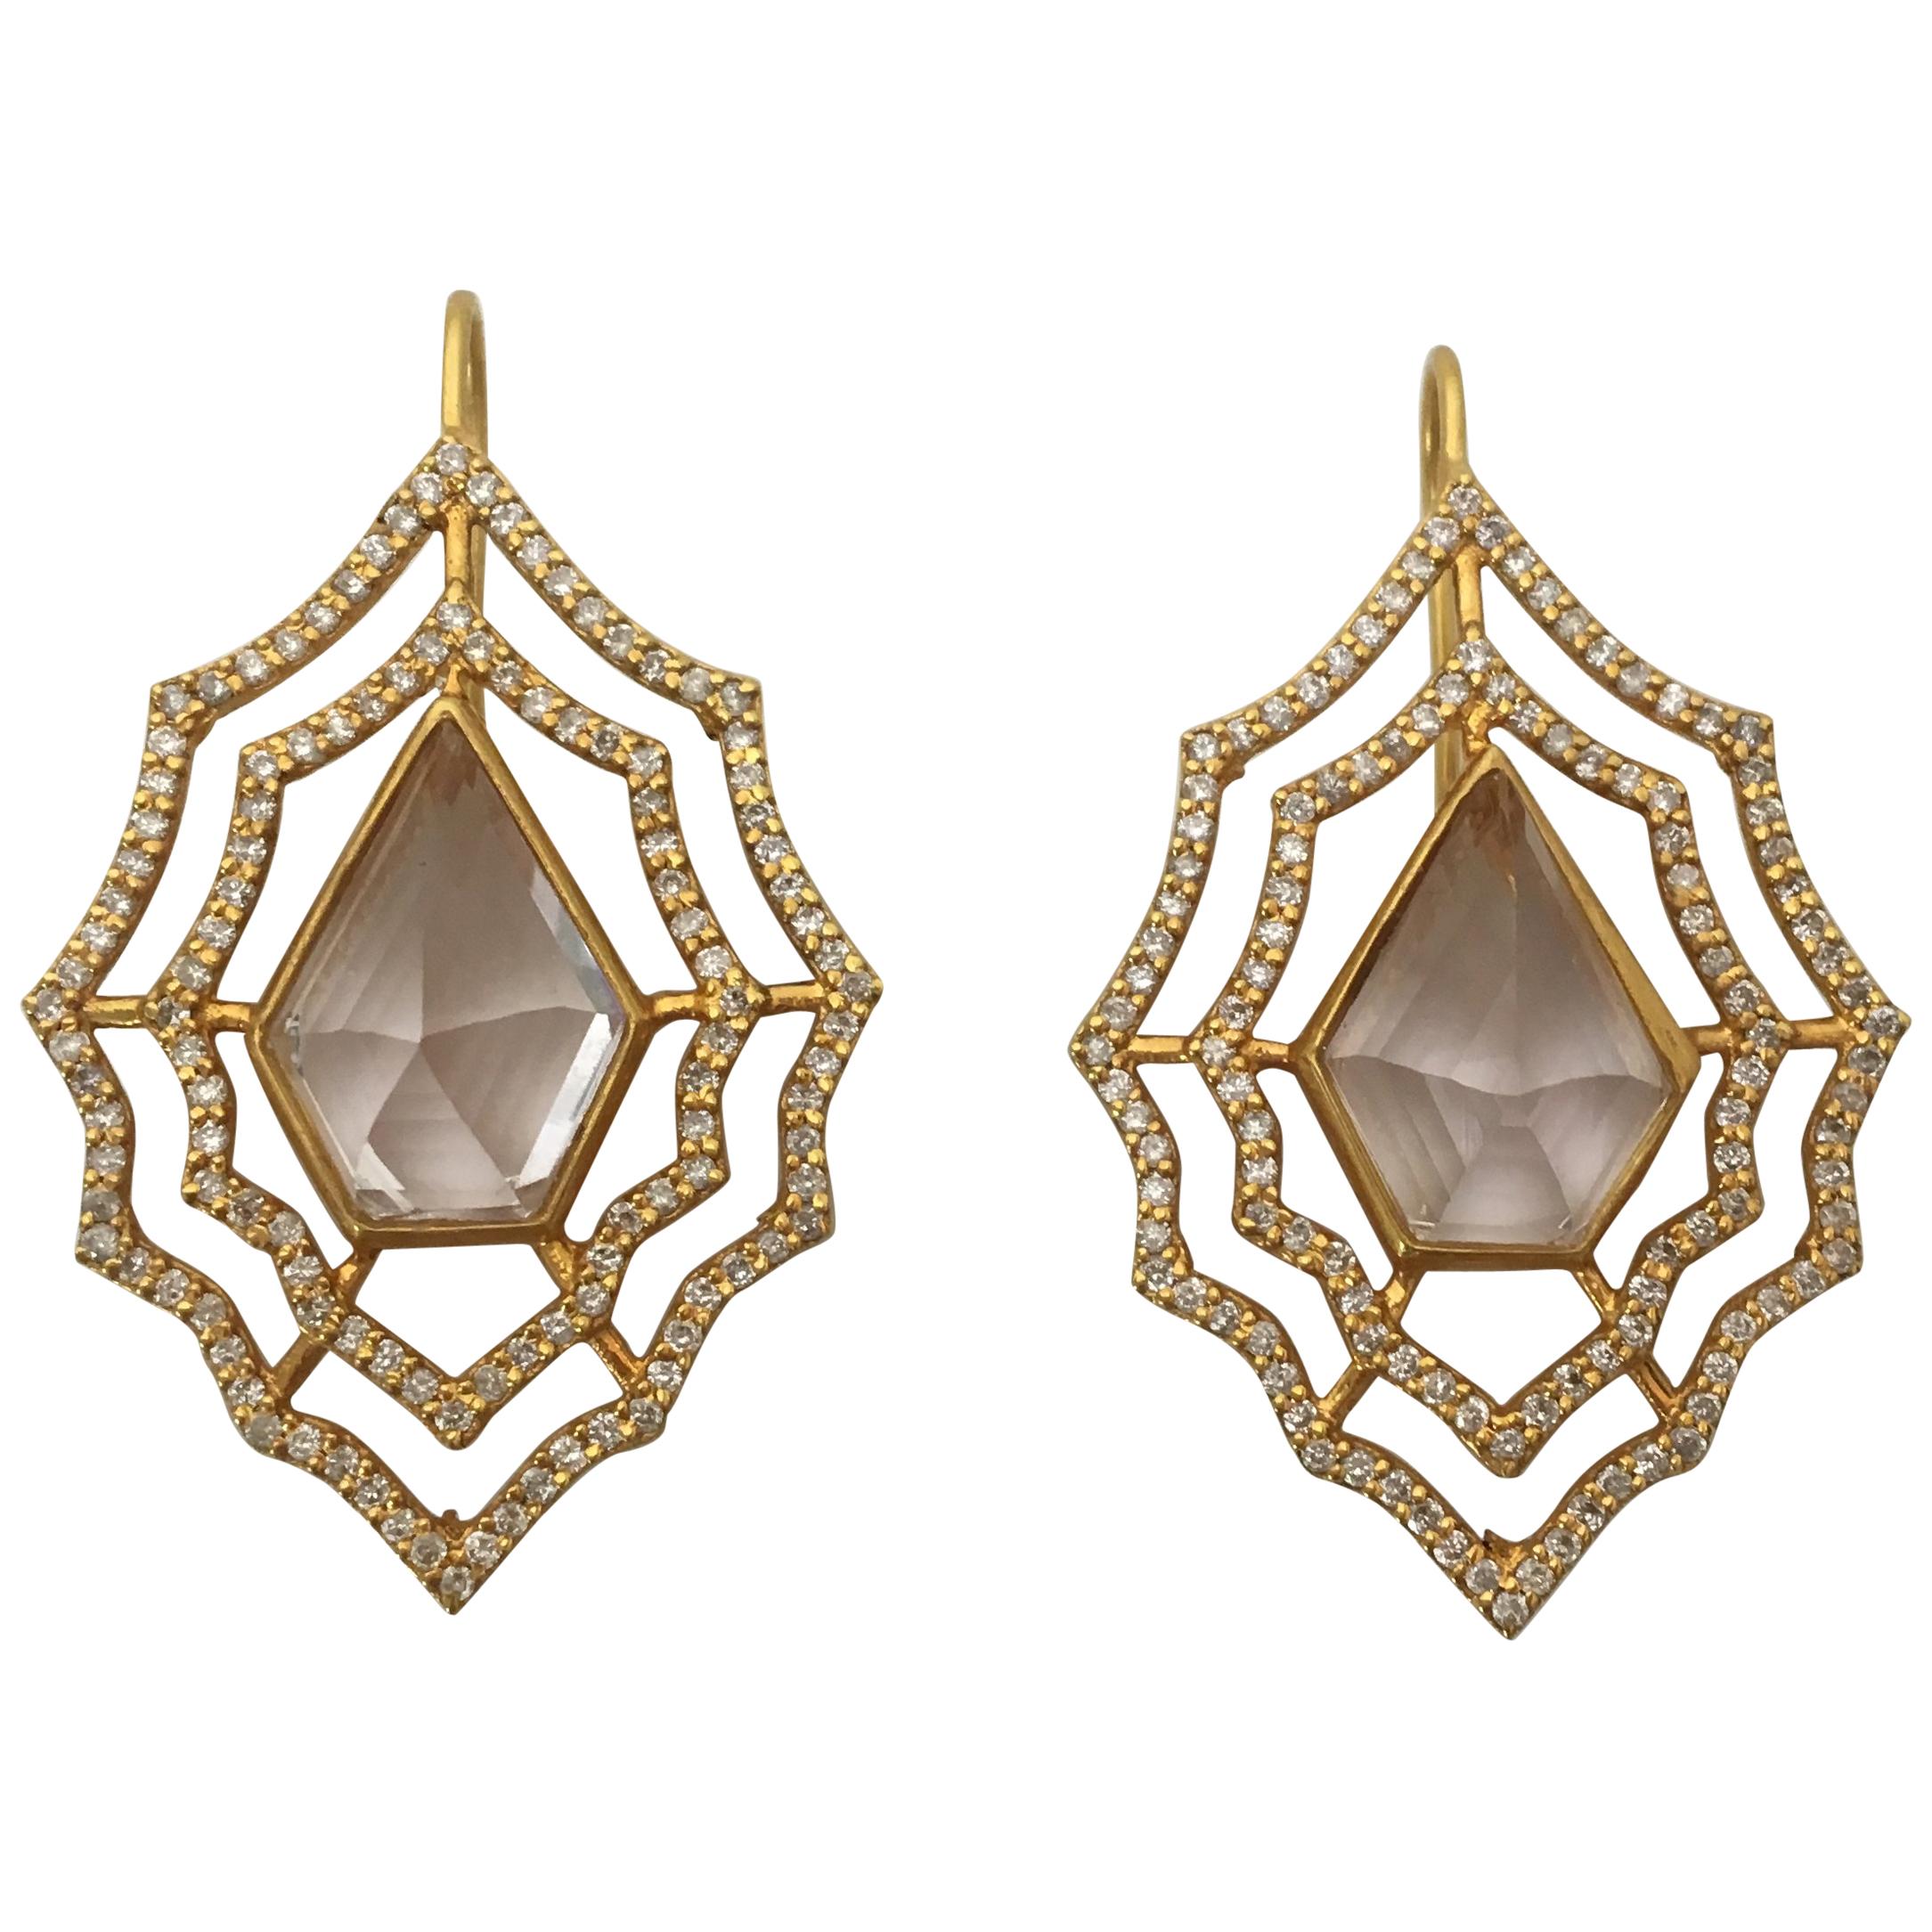 10.96 Carat Kunzite 1.26 Carat Diamond Gold Earrings